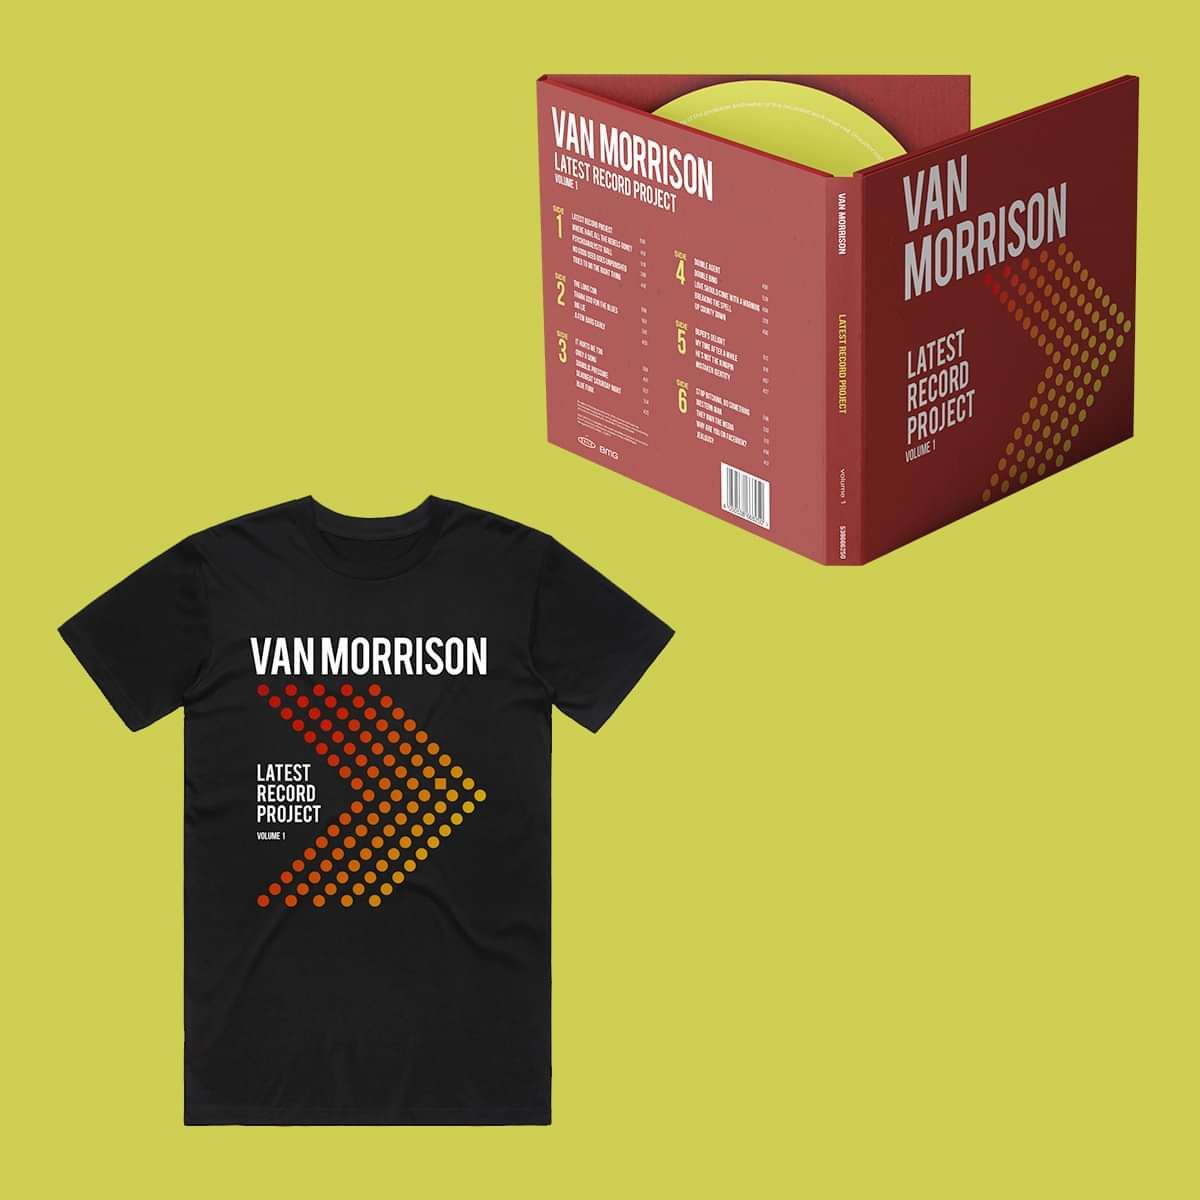 Van Morrison - Latest Record Project Volume 1 - 2CD & T-Shirt Bundle - Van Morrison US